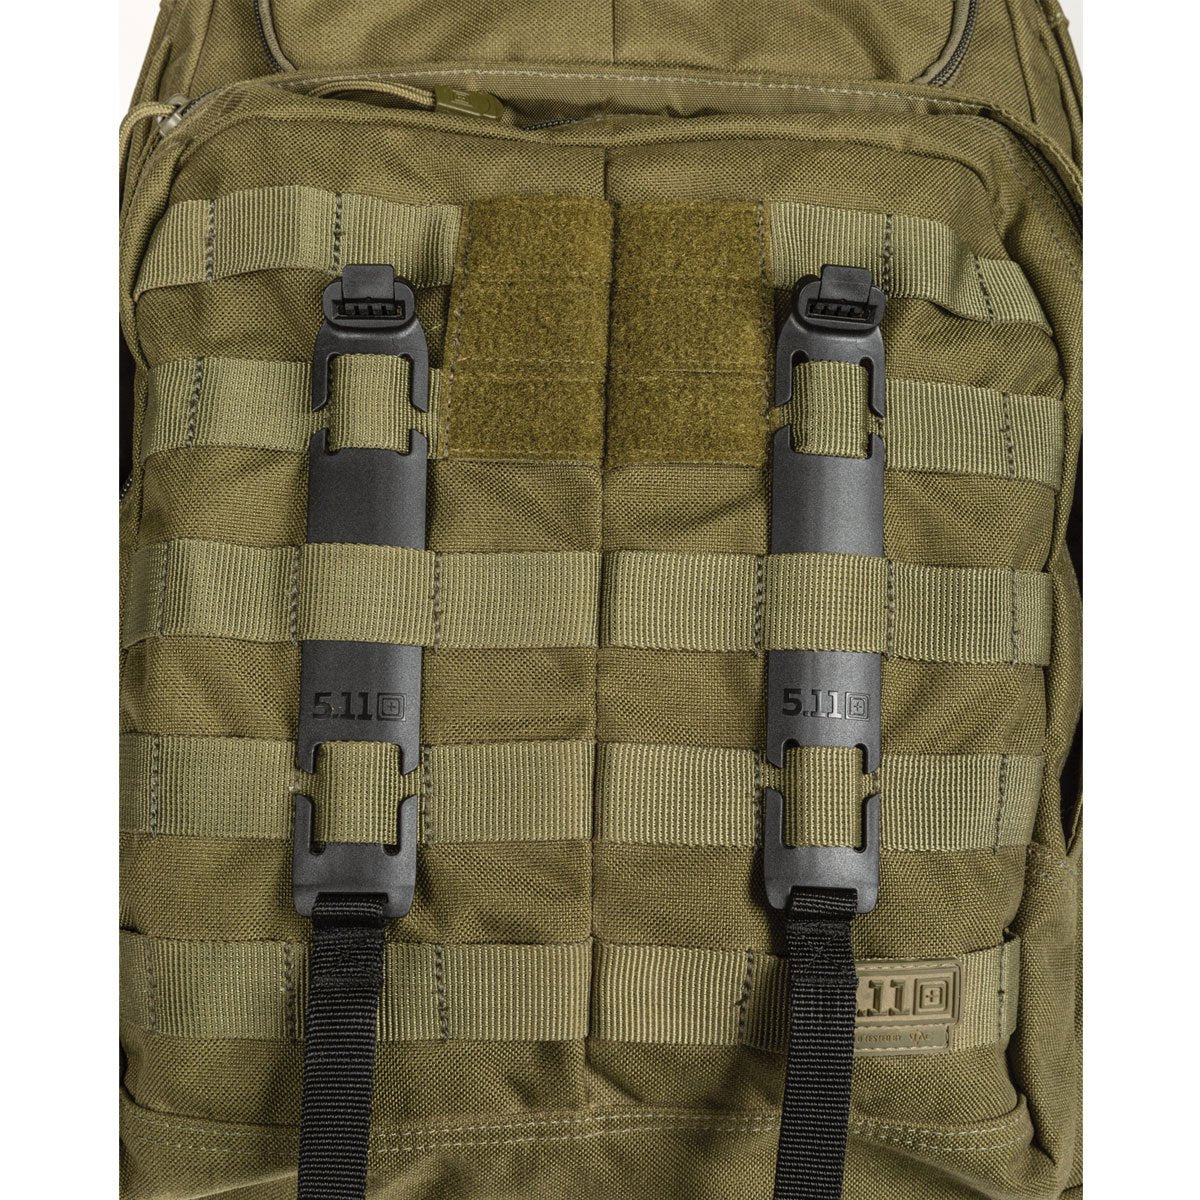 5.11 Tactical Sidewinder Straps LG 2PK | Tactical Gear Australia Tactical Gear